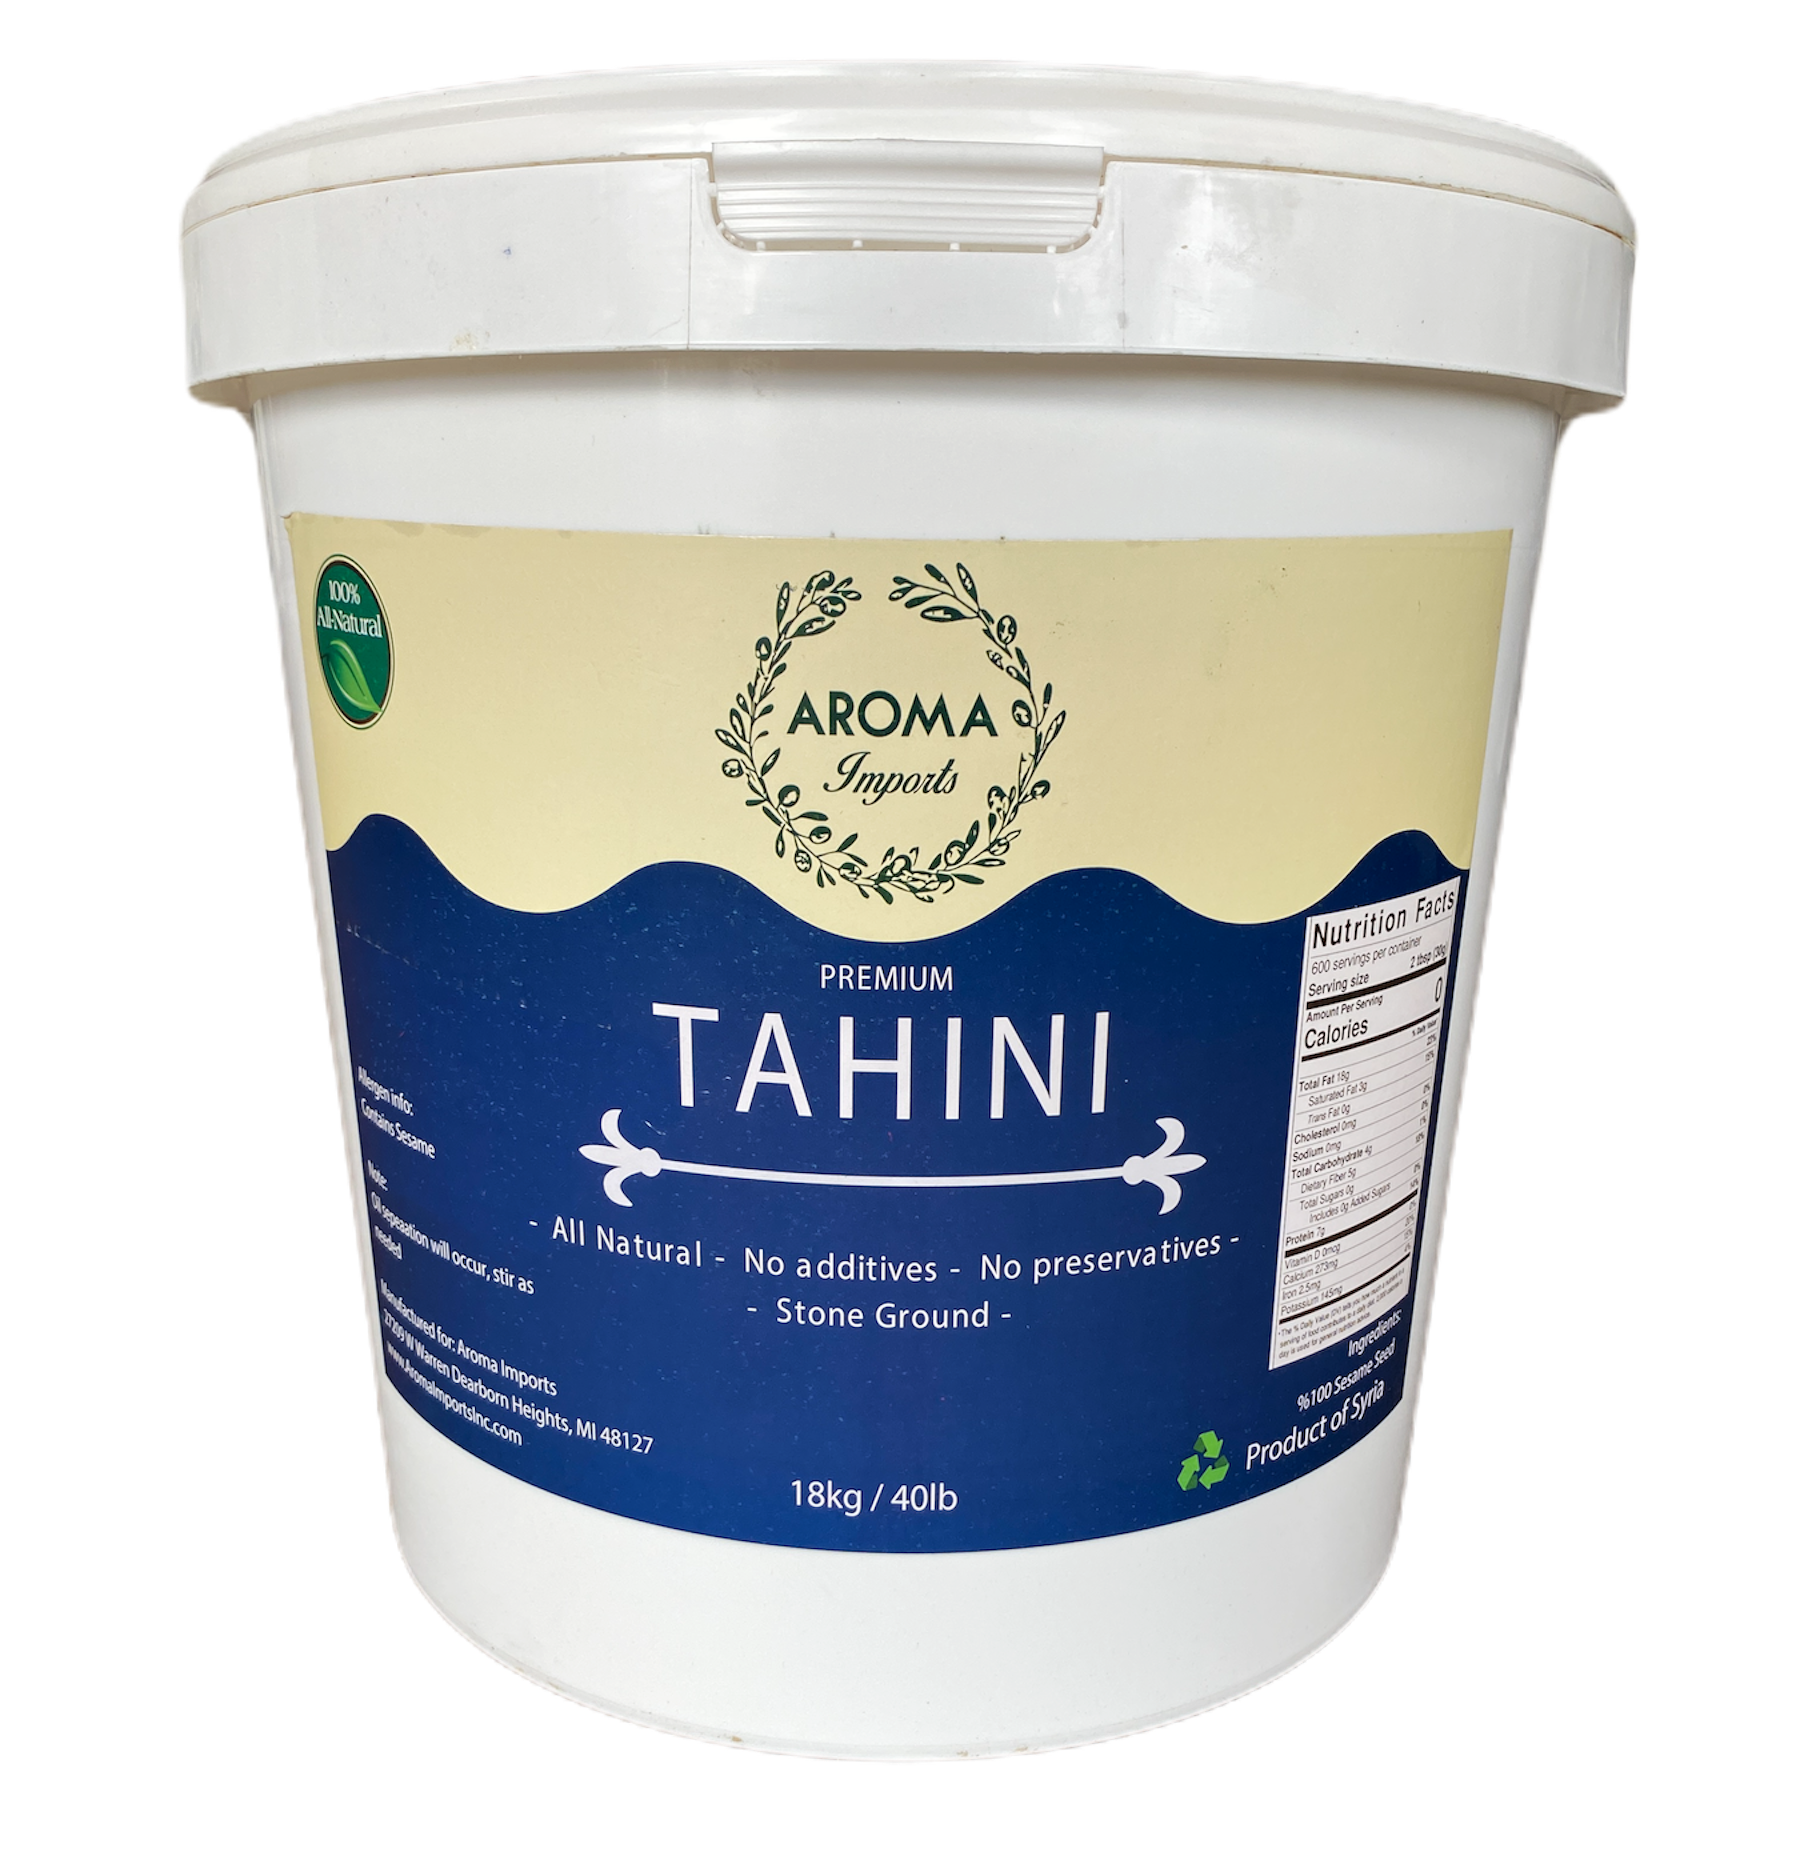 All Natural Stone-Ground Tahini - Aroma Imports